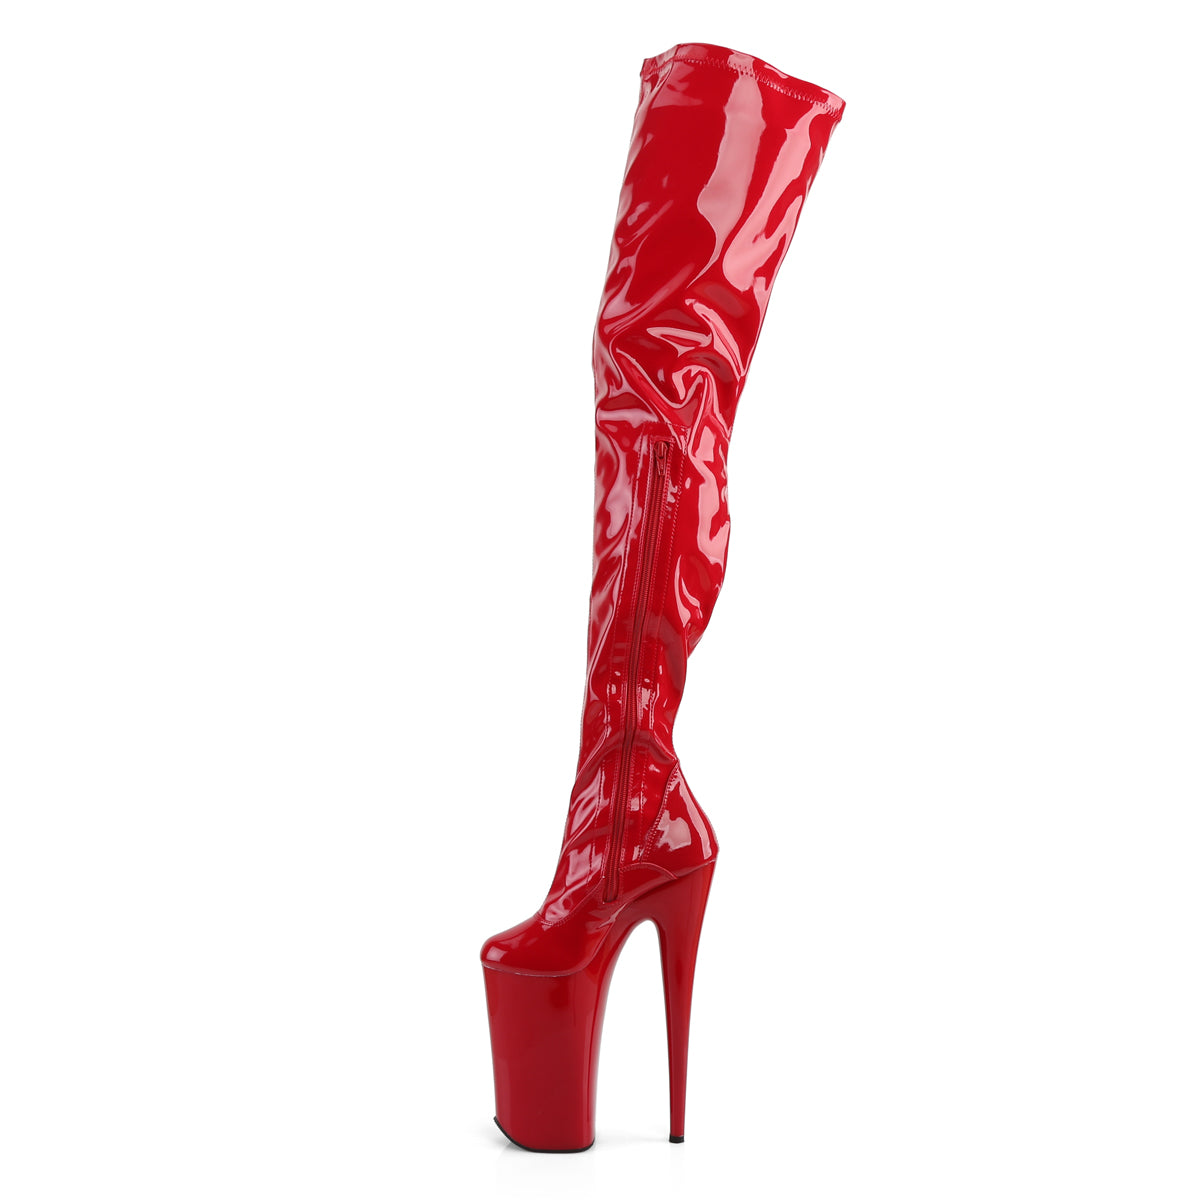 Pleaser Stivali da donna BEYOND-4000 Pat / rossa elasticizzati rossi